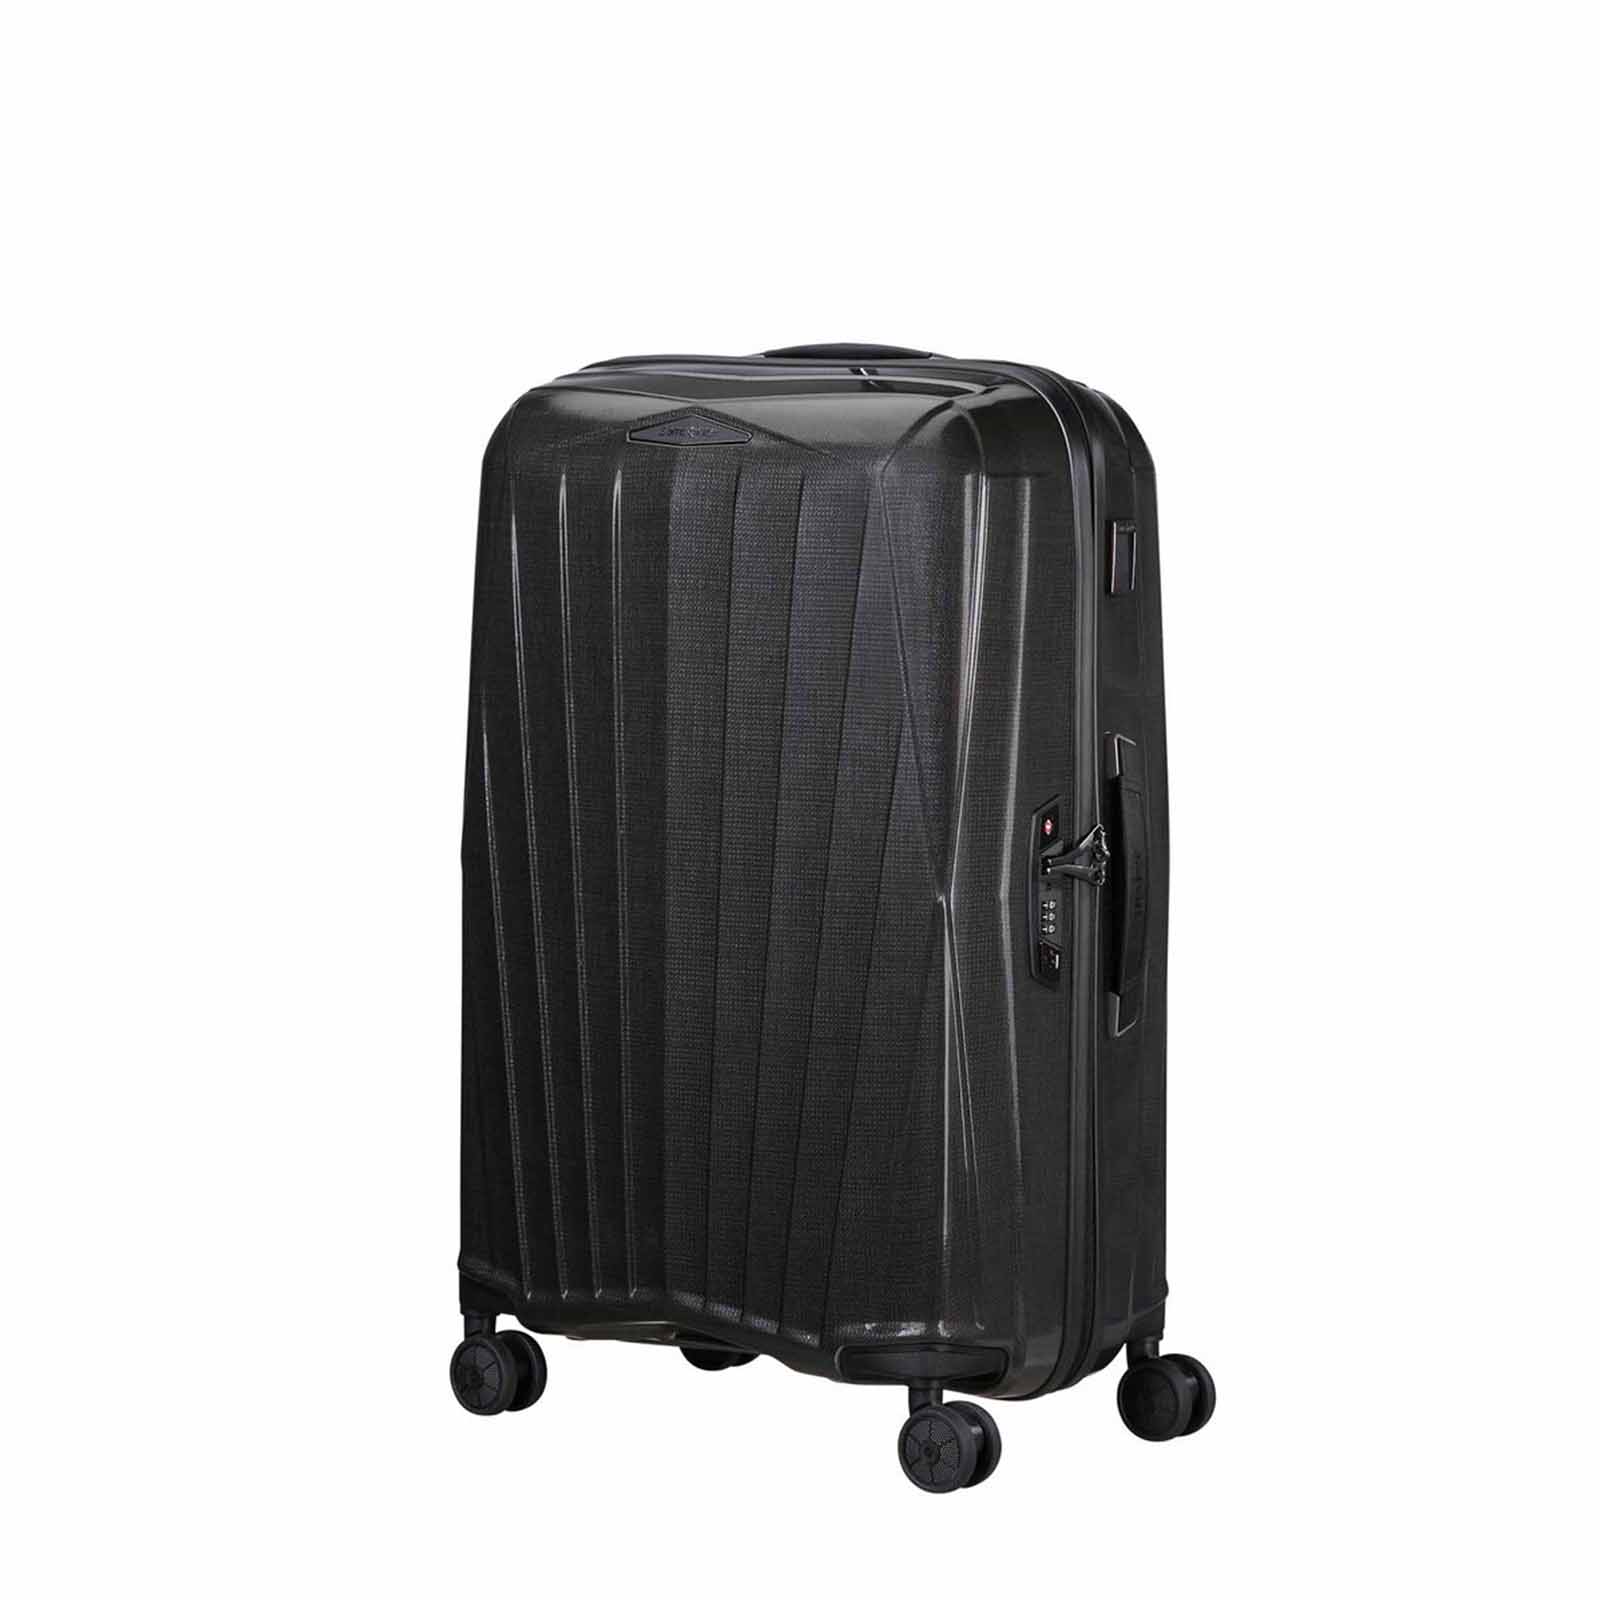 Samsonite-Major-Lite-69cm-Suitcase-Black-Front-Angle